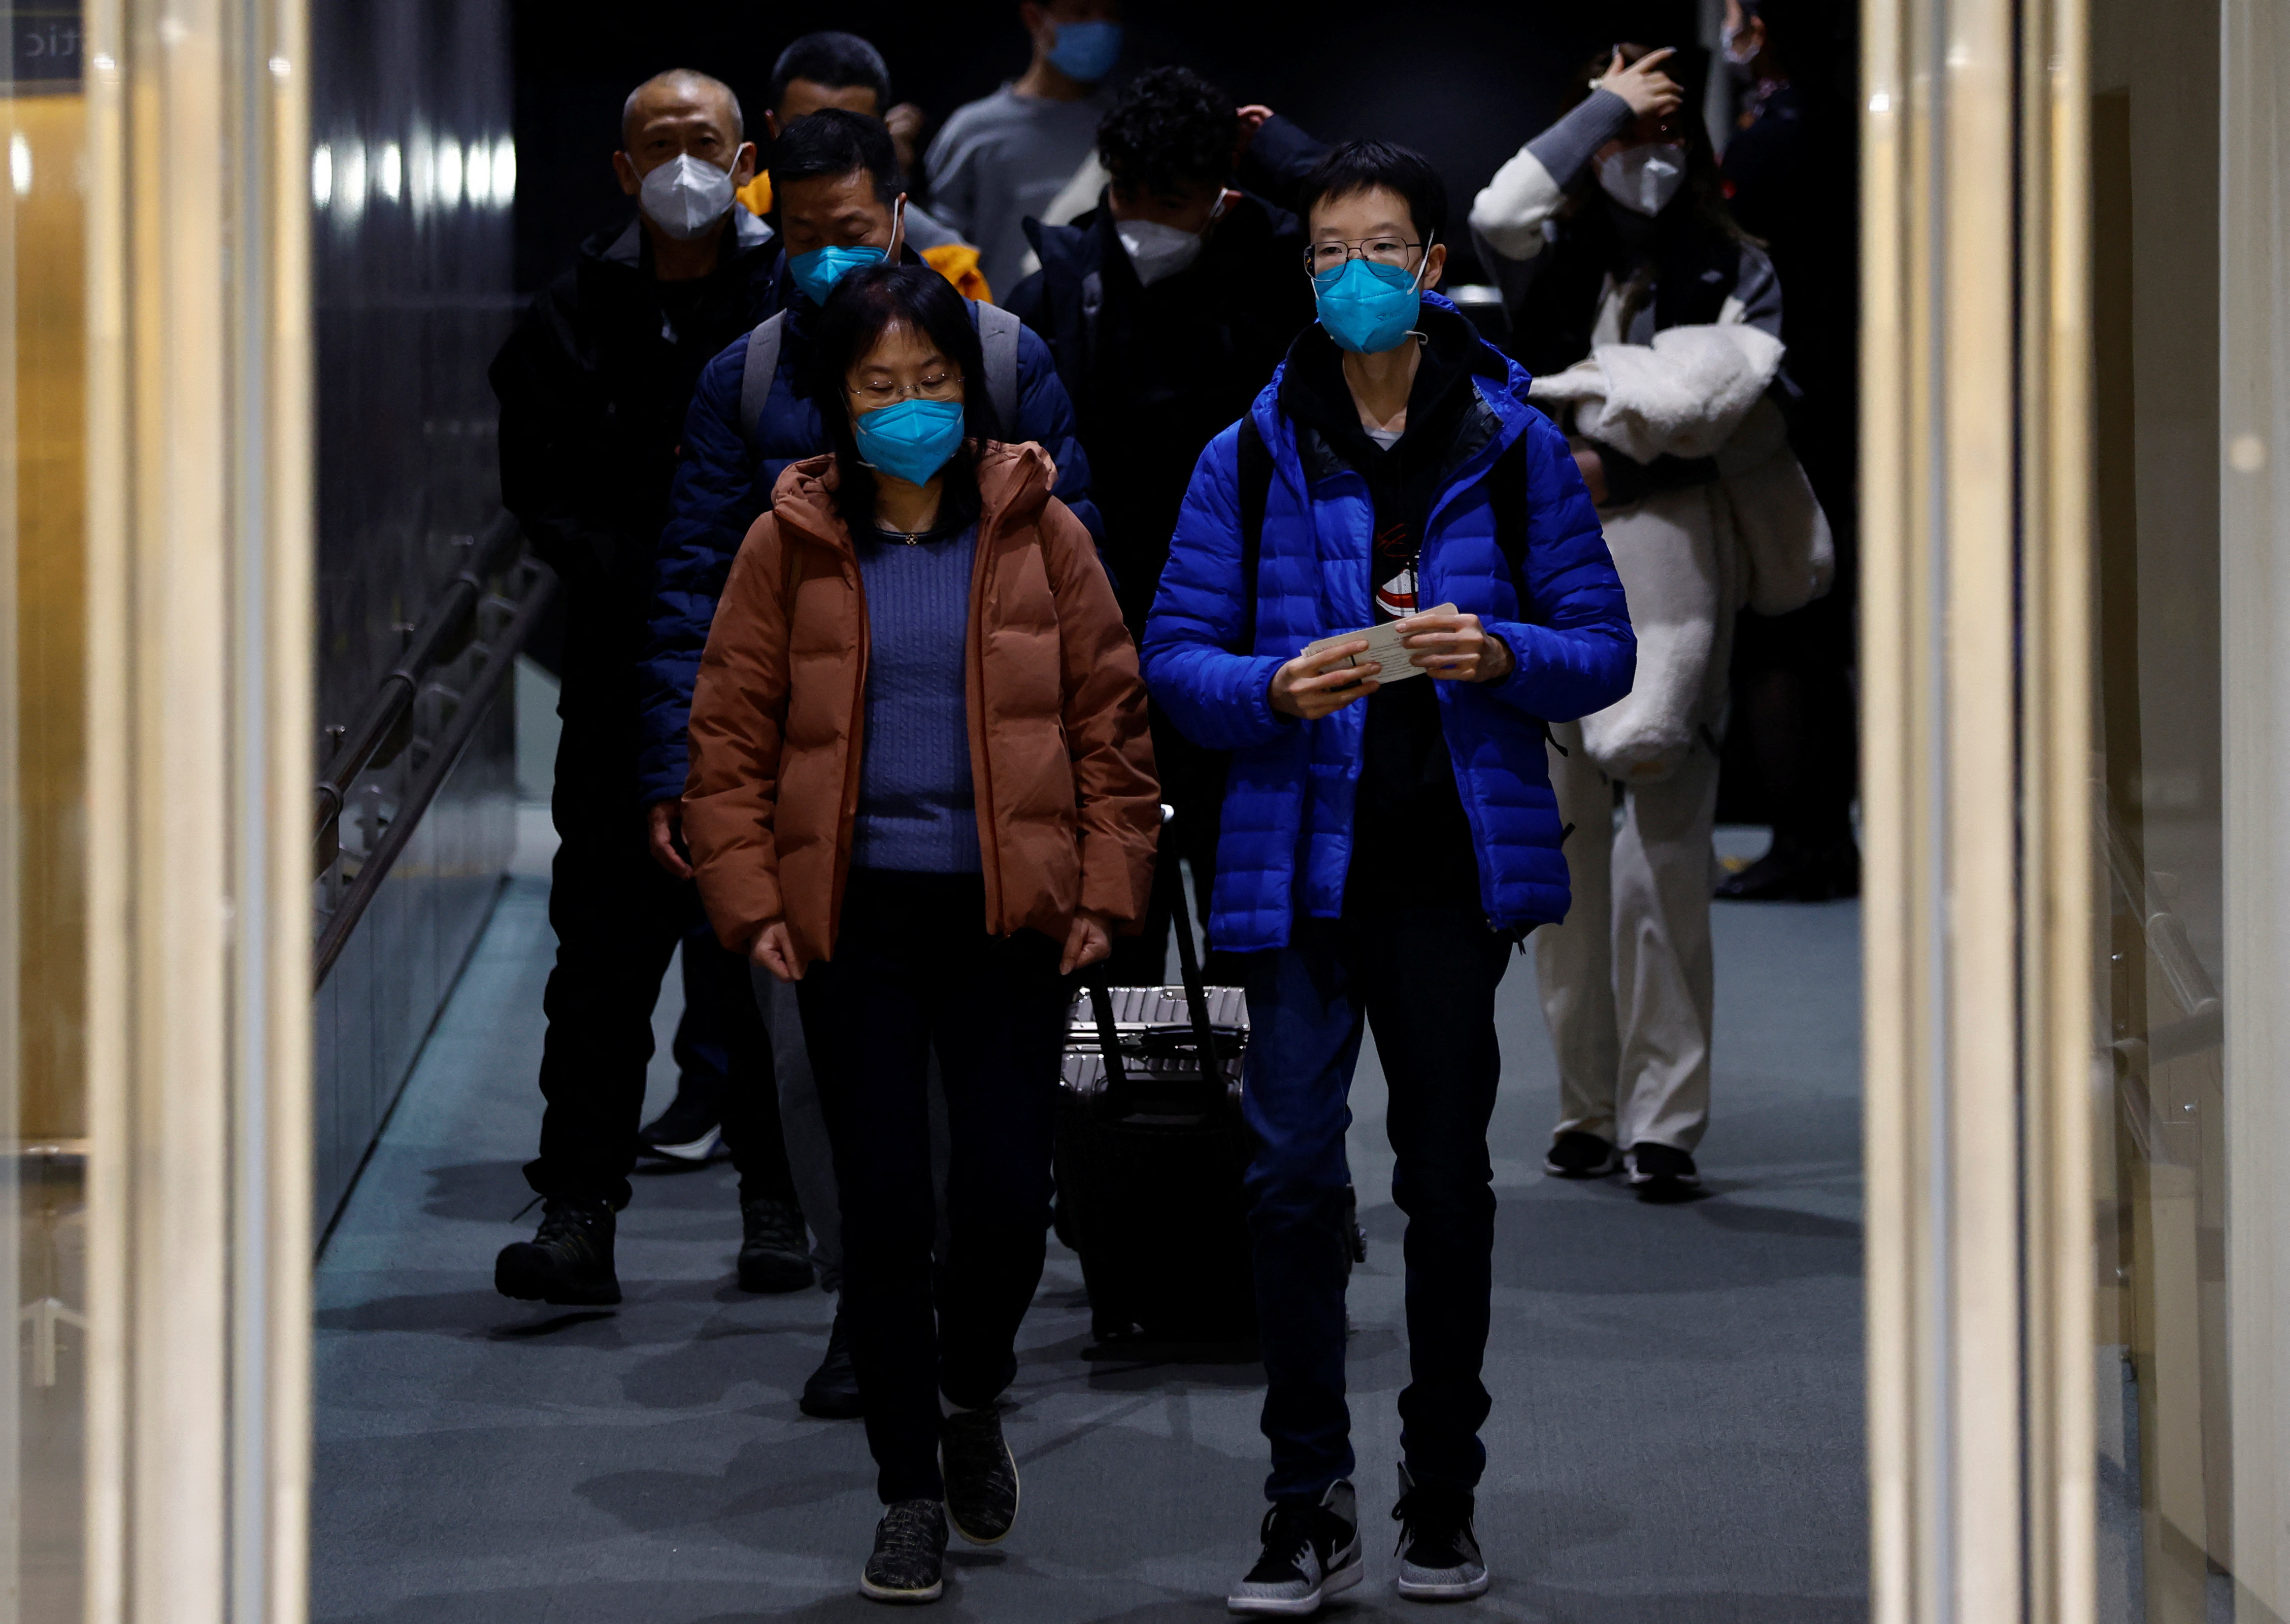 Passengers on a plane from China’s capital Beijing arrive at Narita international airport in Narita